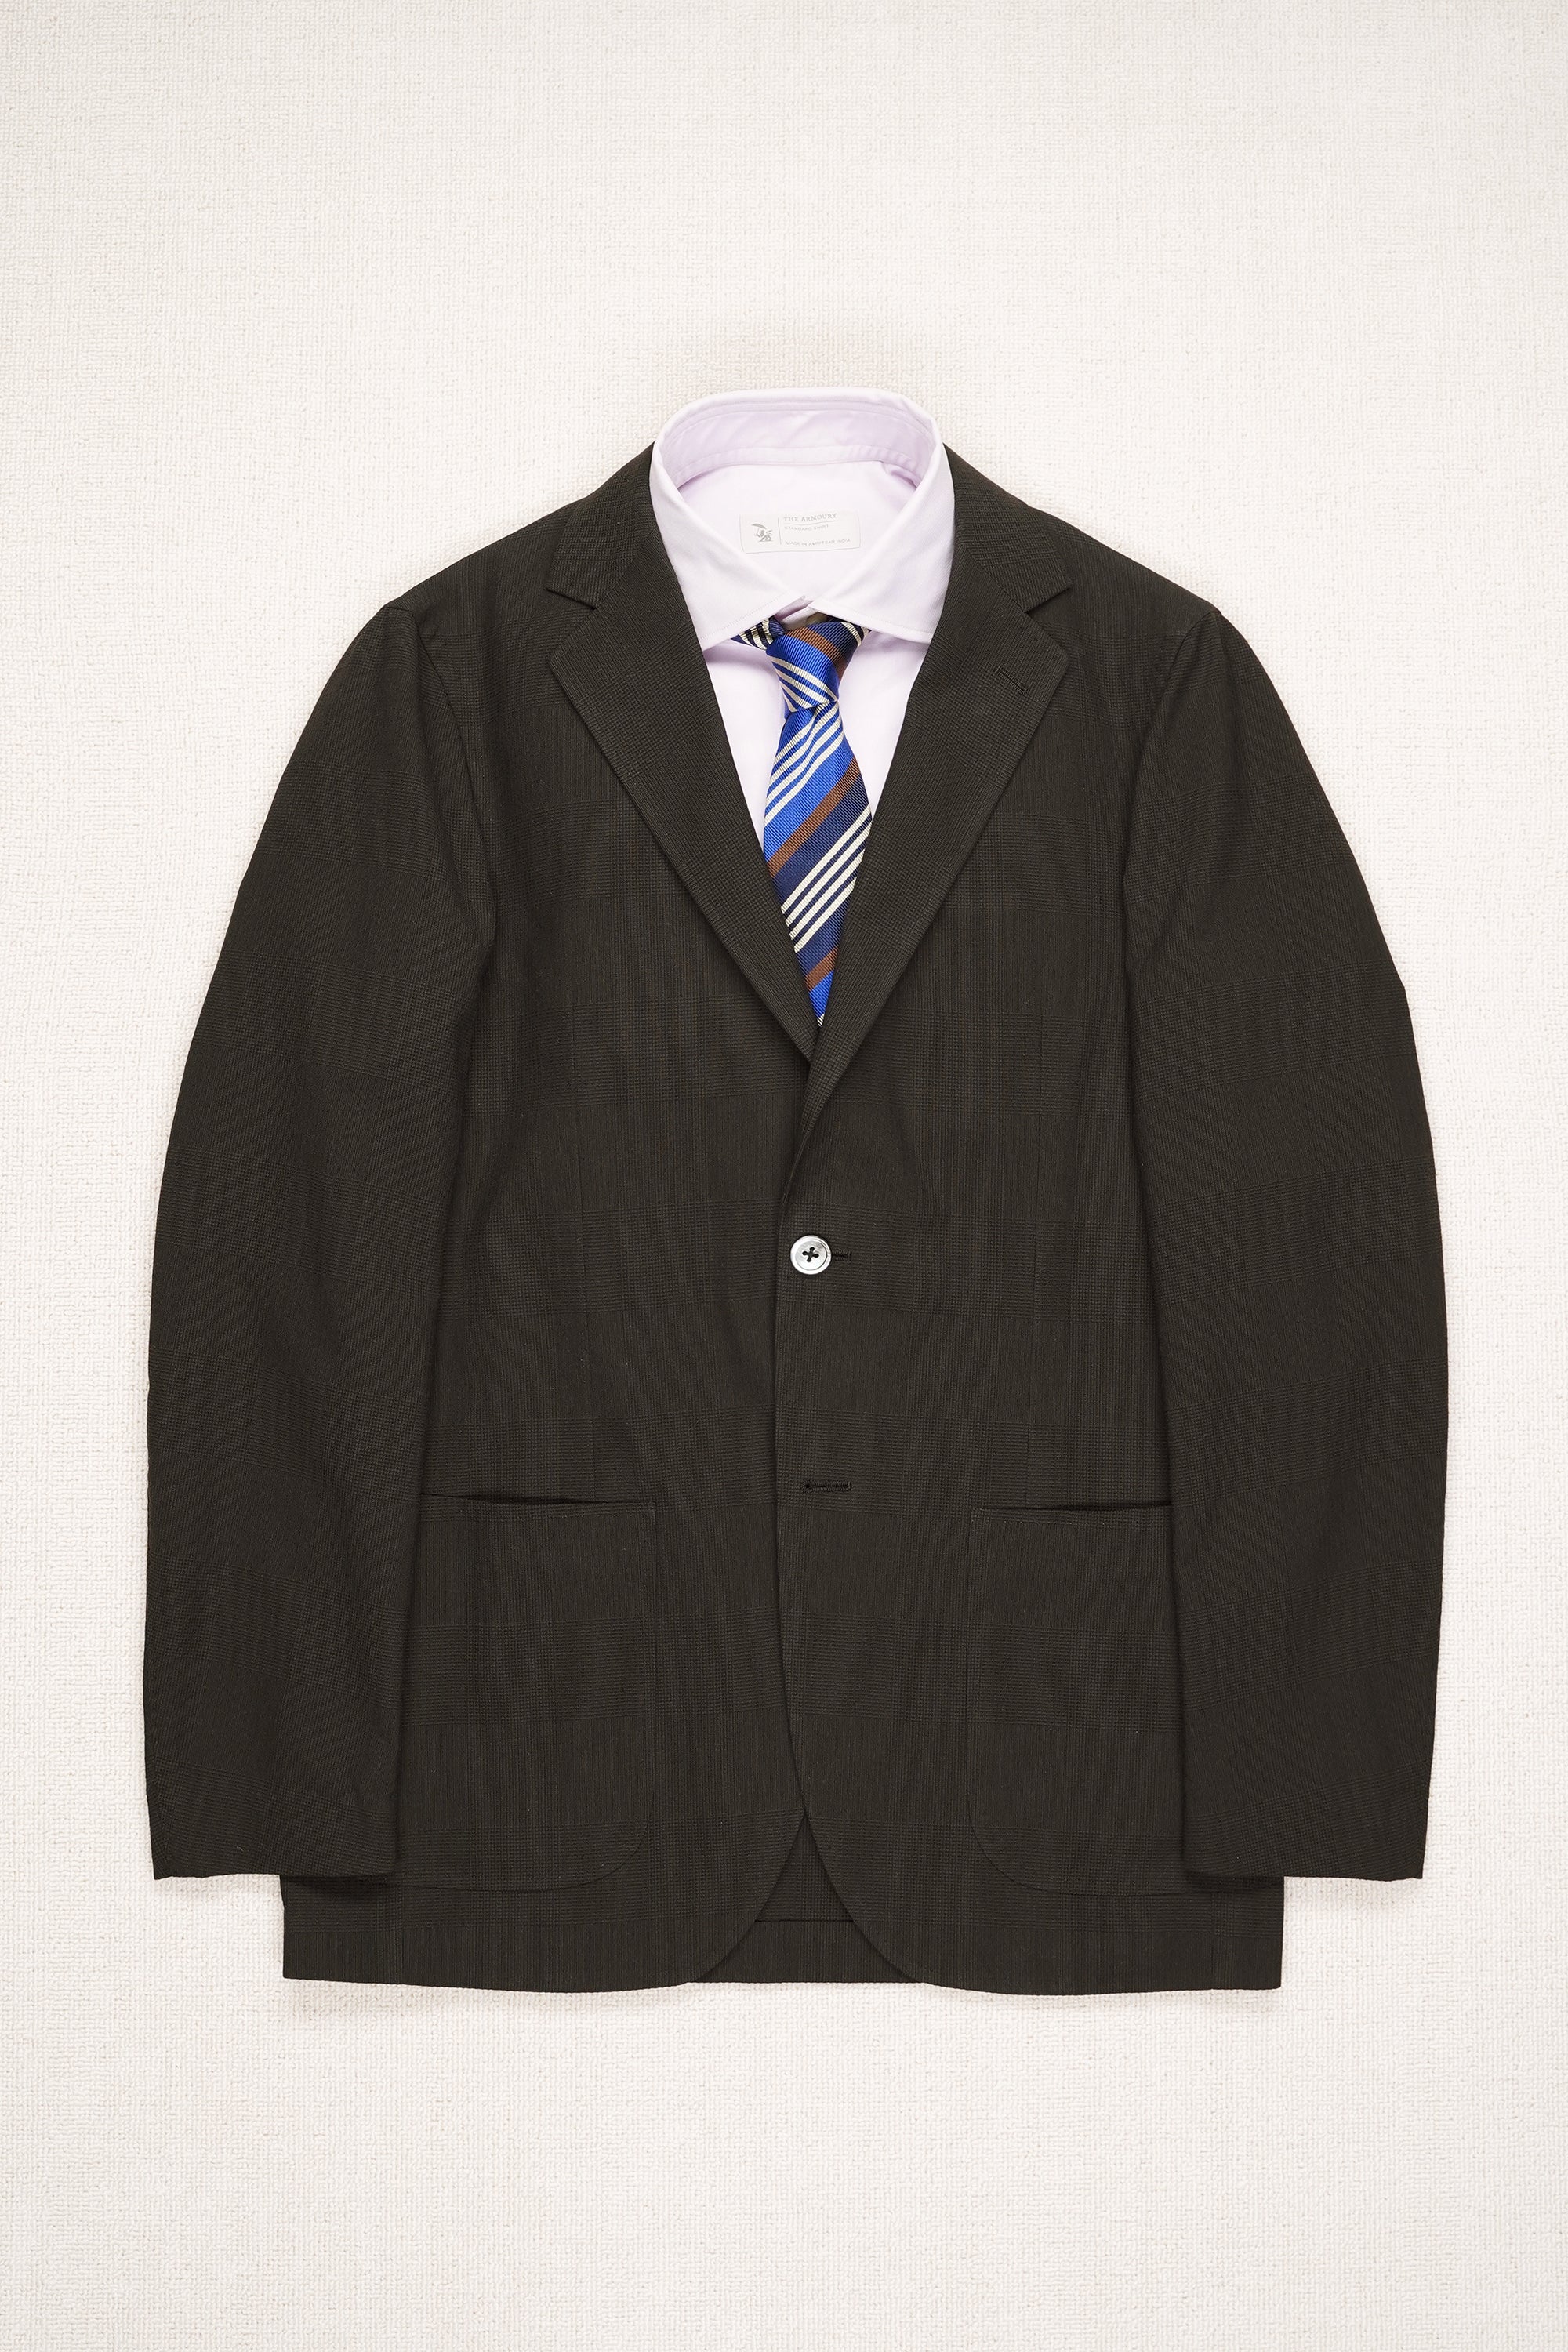 Ring Jacket Model 298 Dark Brown Prince of Wales Check Cotton/Wool Sport Coat